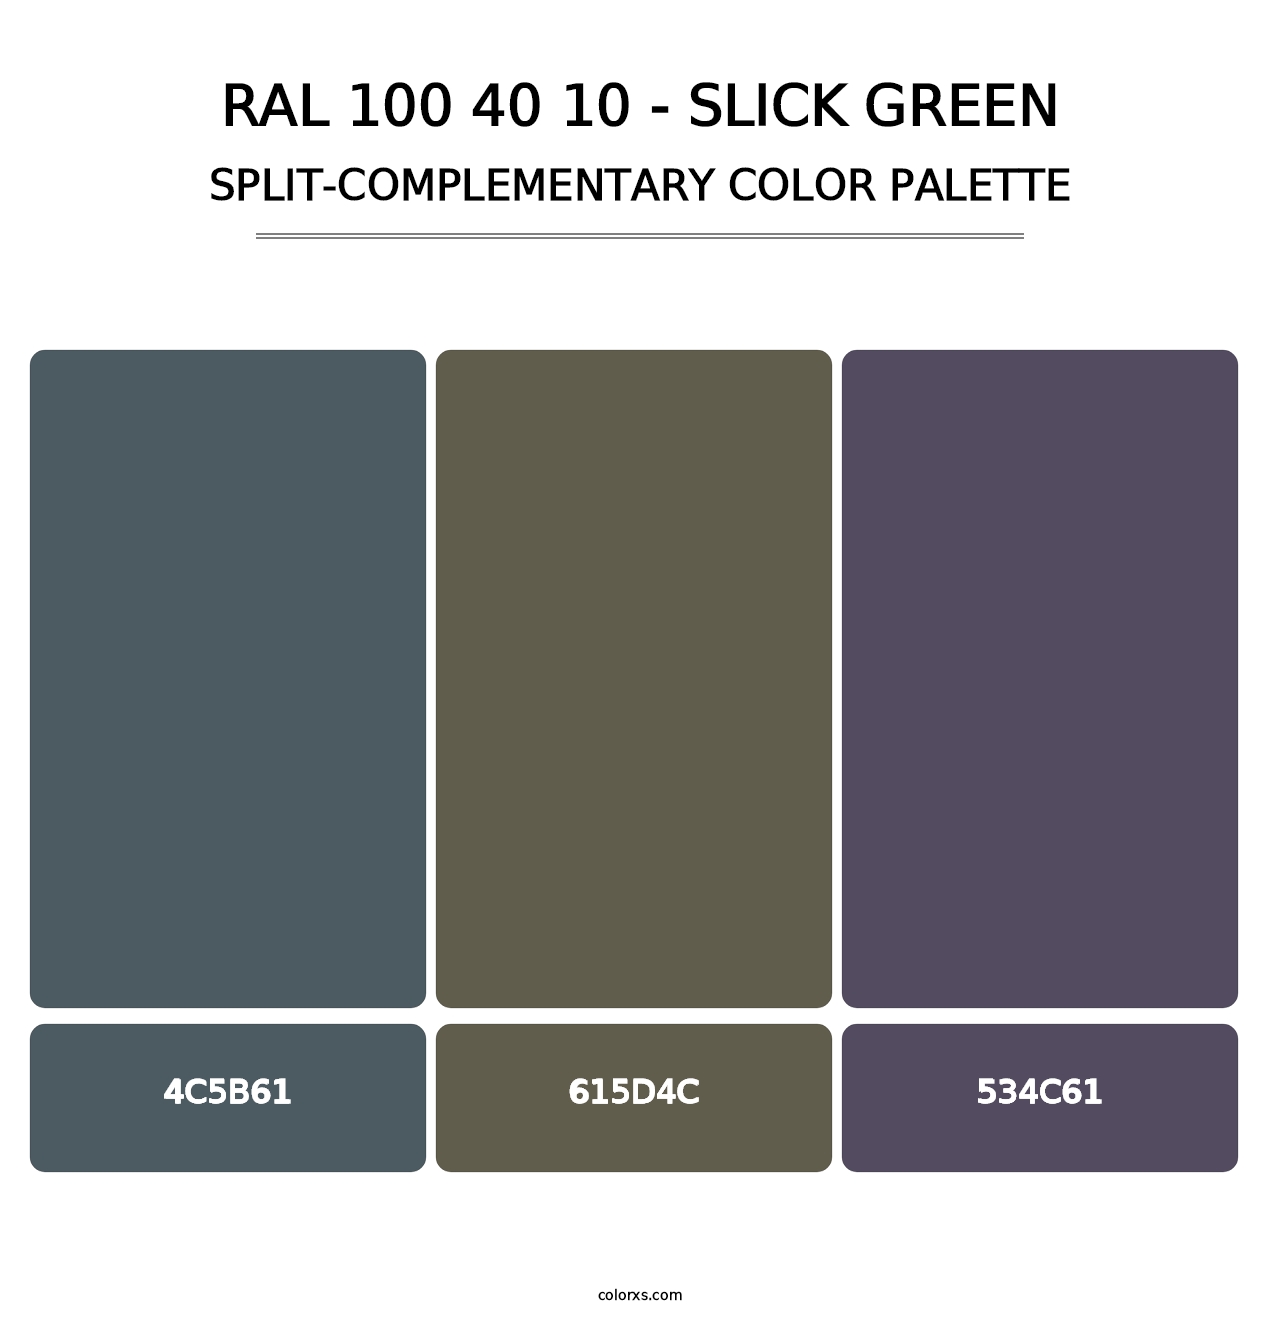 RAL 100 40 10 - Slick Green - Split-Complementary Color Palette